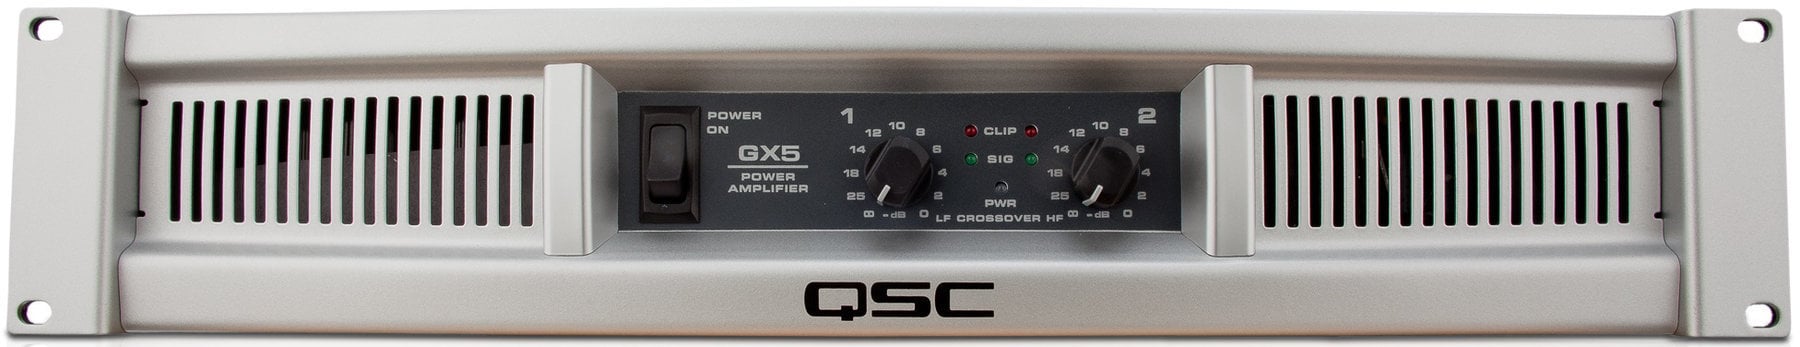 Power amplifier QSC GX5 Power amplifier